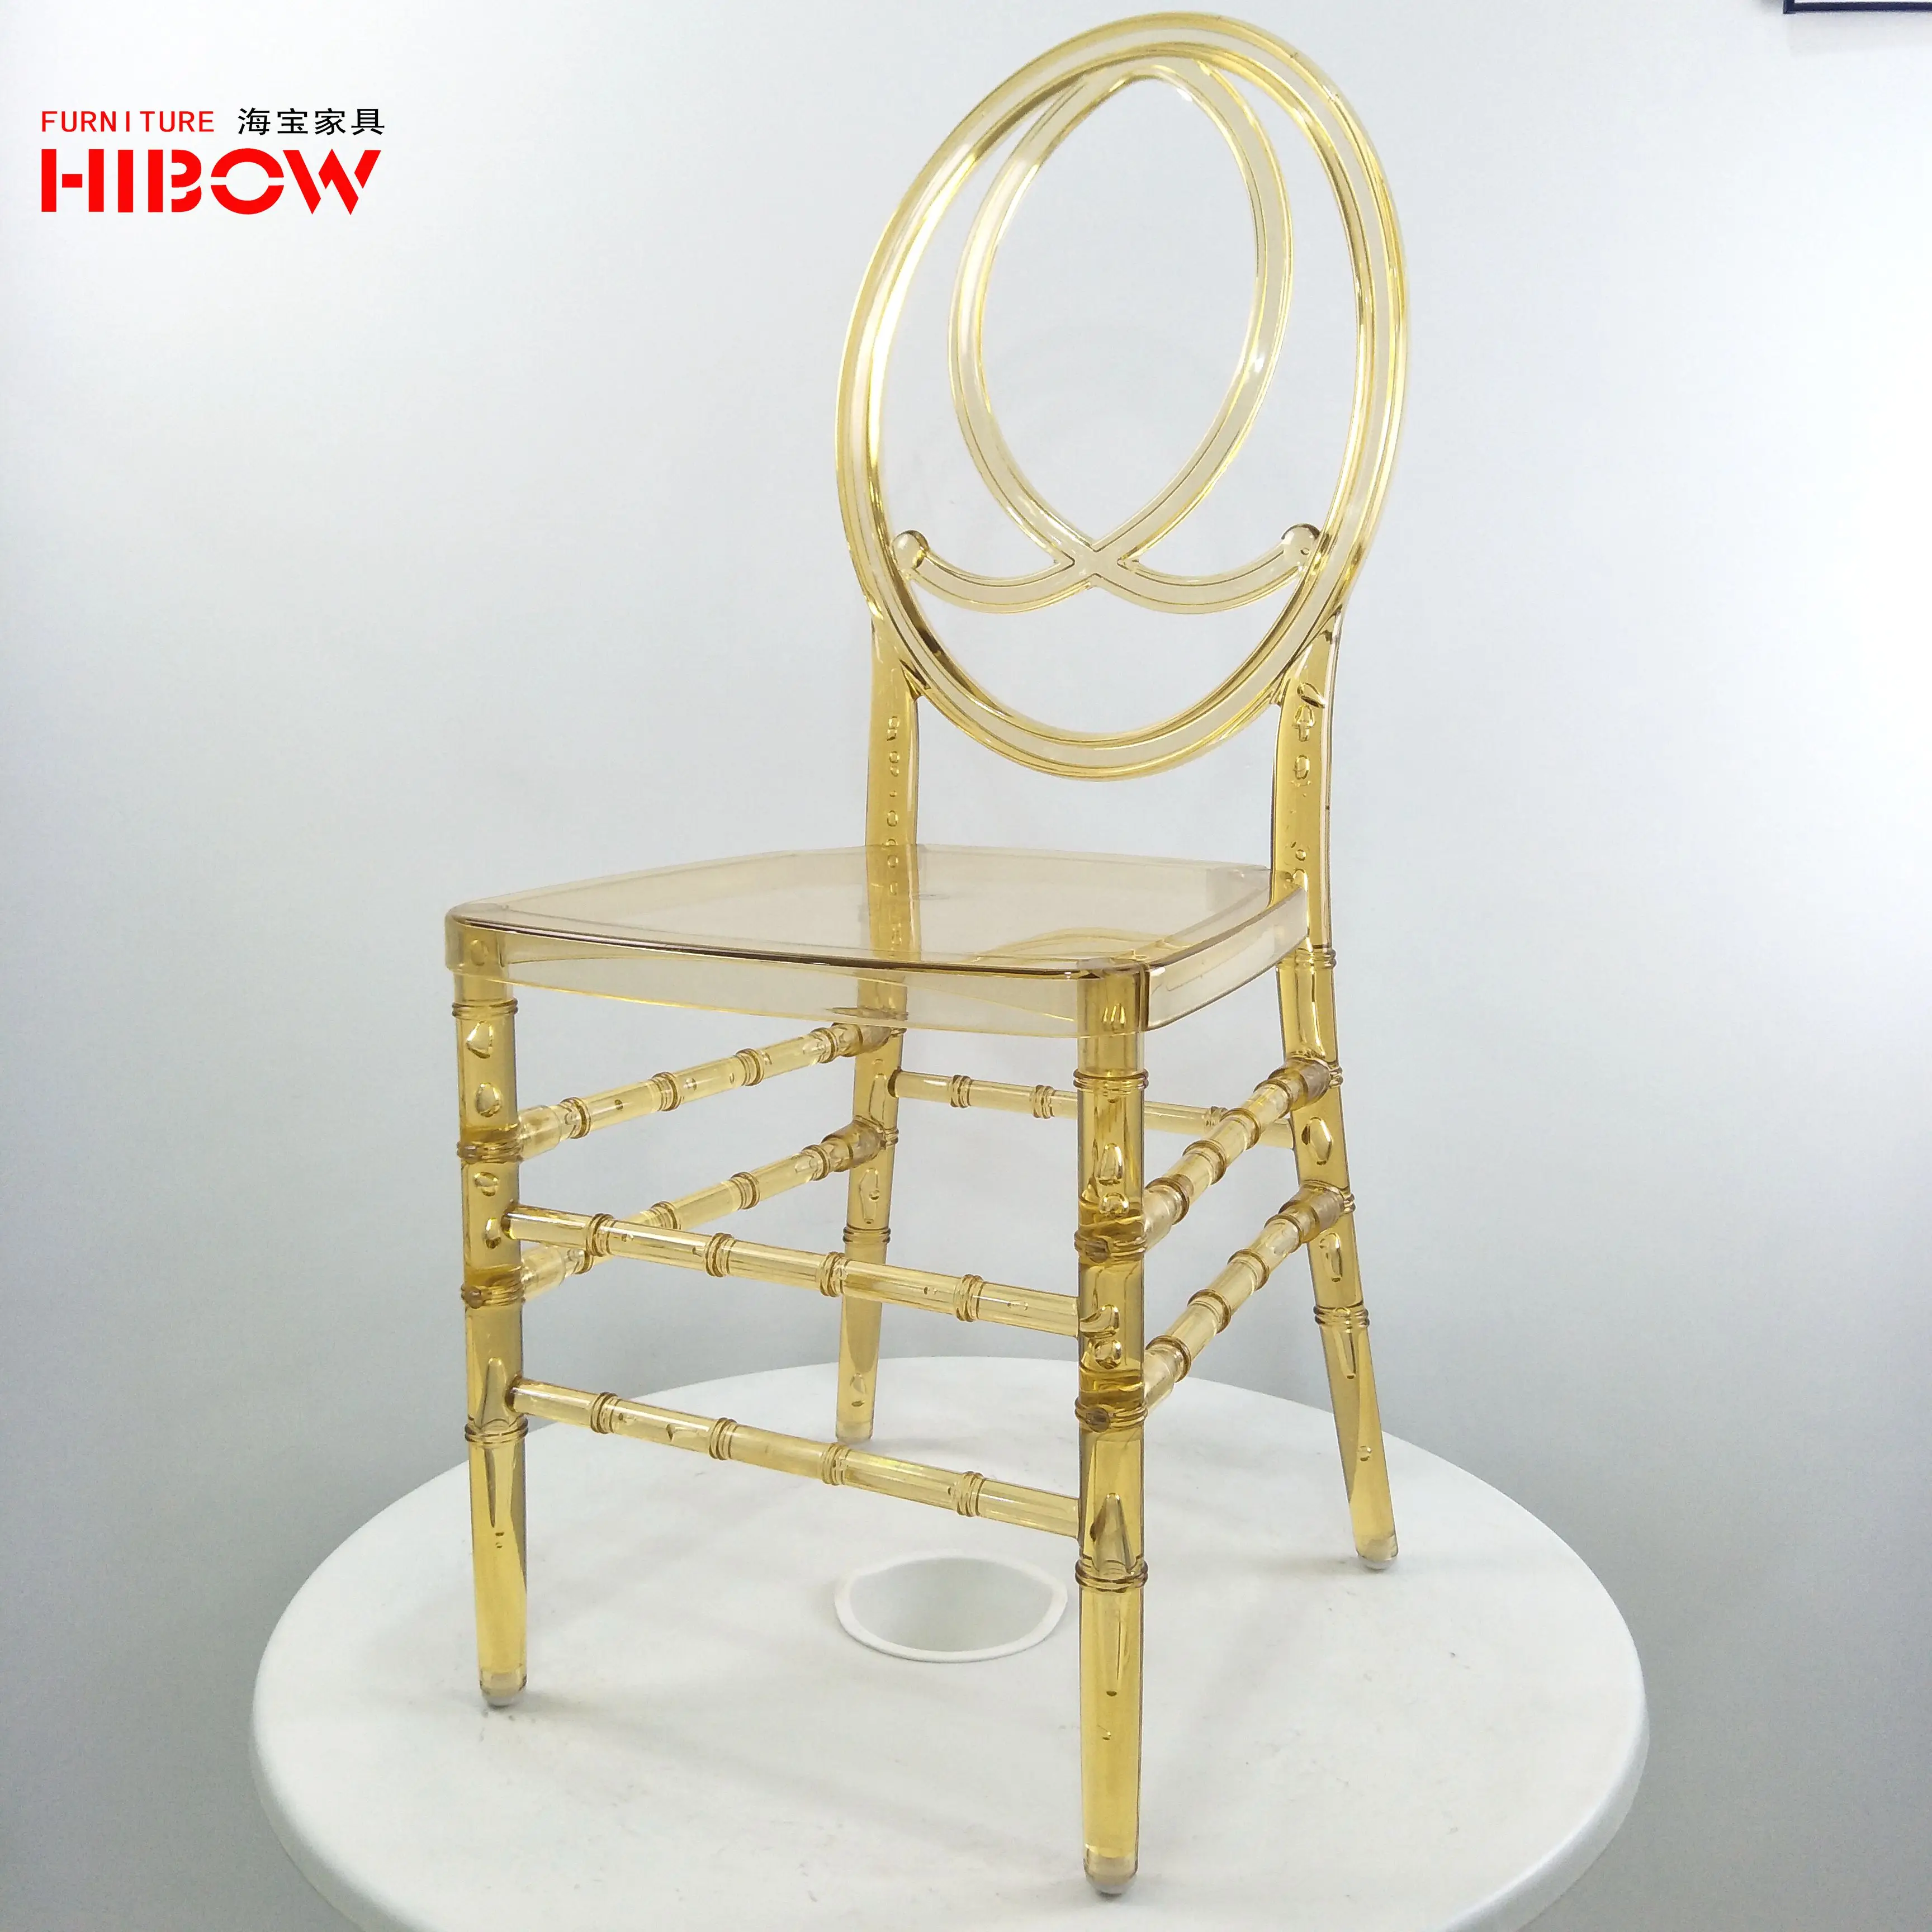 China Wholesale Wedding And Event Acrylic Chairs Resin Phoenix Chair Wholesale Wedding And Event Chairs Buy Transparent Acrylic Phoenix Chair